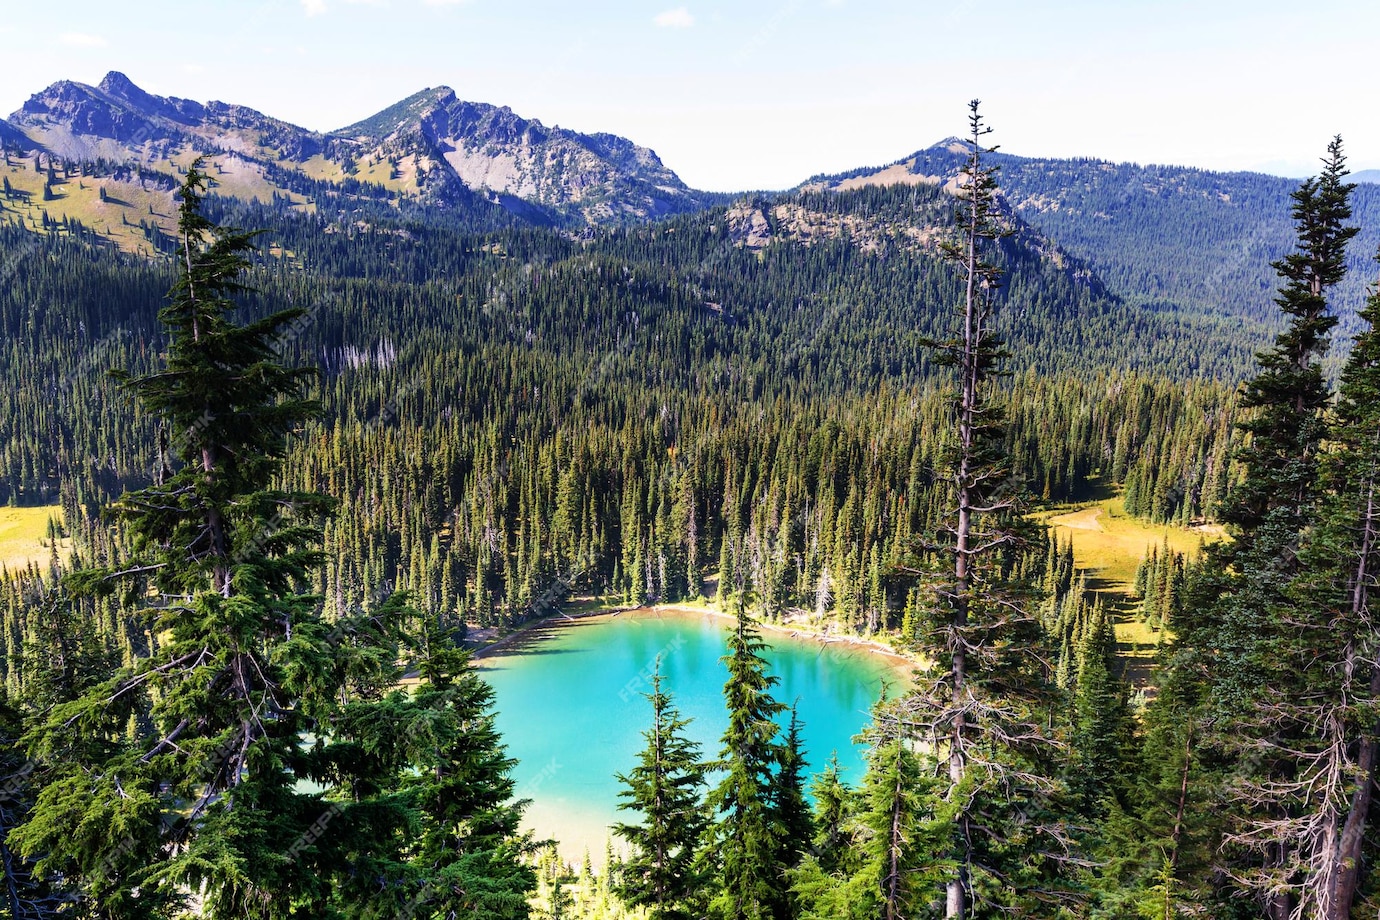 Premium Photo | Serenity lake in the mountains